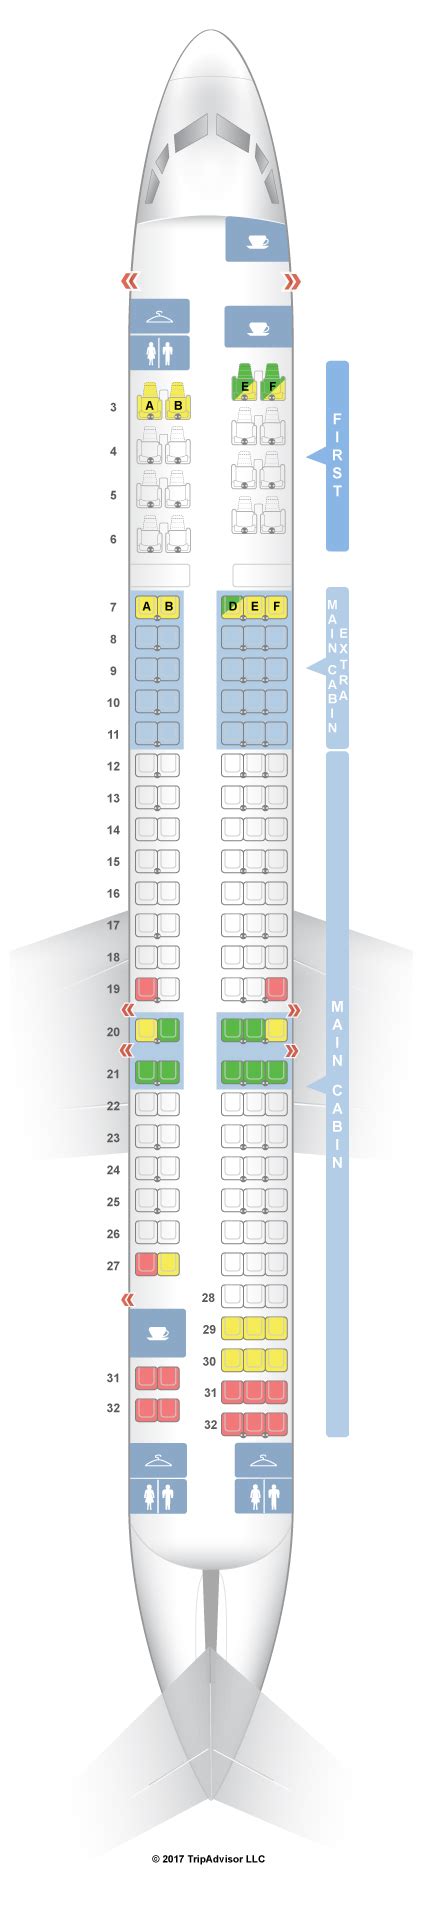 Seatguru Seat Map American Airlines Mcdonnell Douglas Md 80 M80